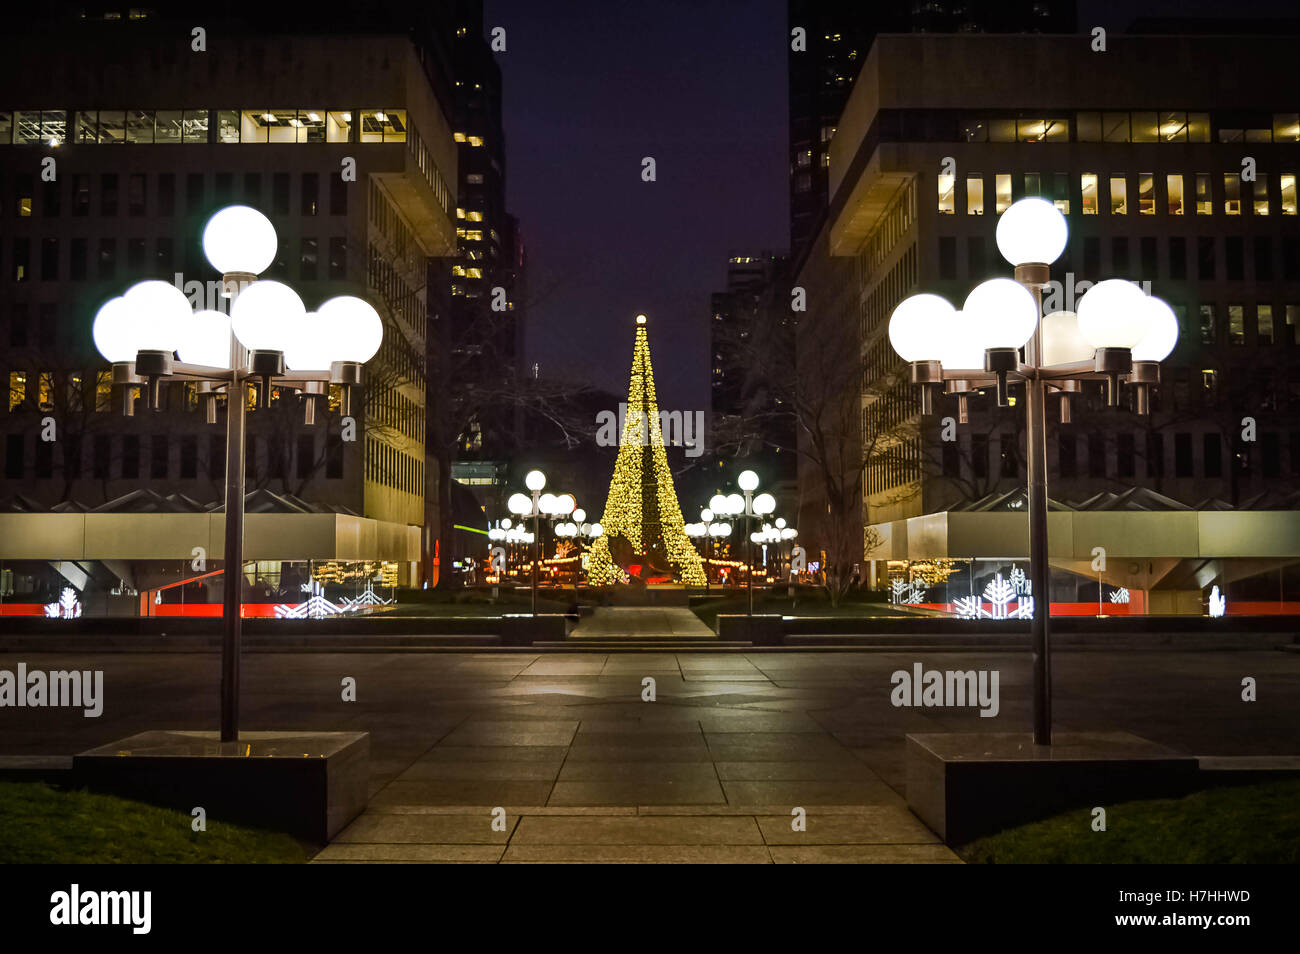 Illuminated Christmas tree in Montreal Stock Photo